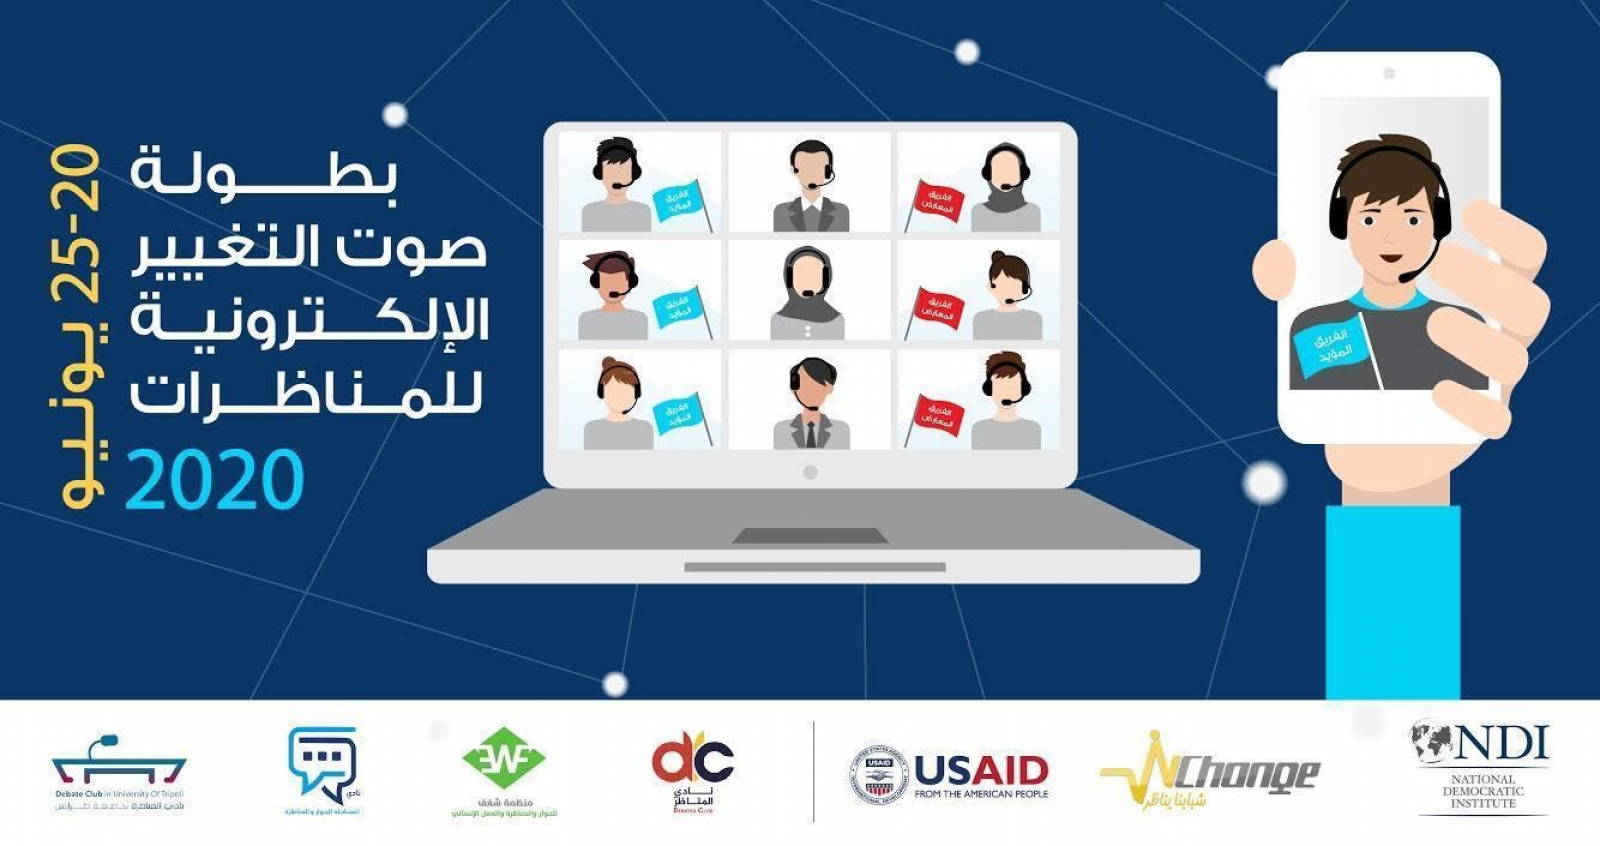 NDI’s Voice of Change Virtual Debate Tournament in Libya 